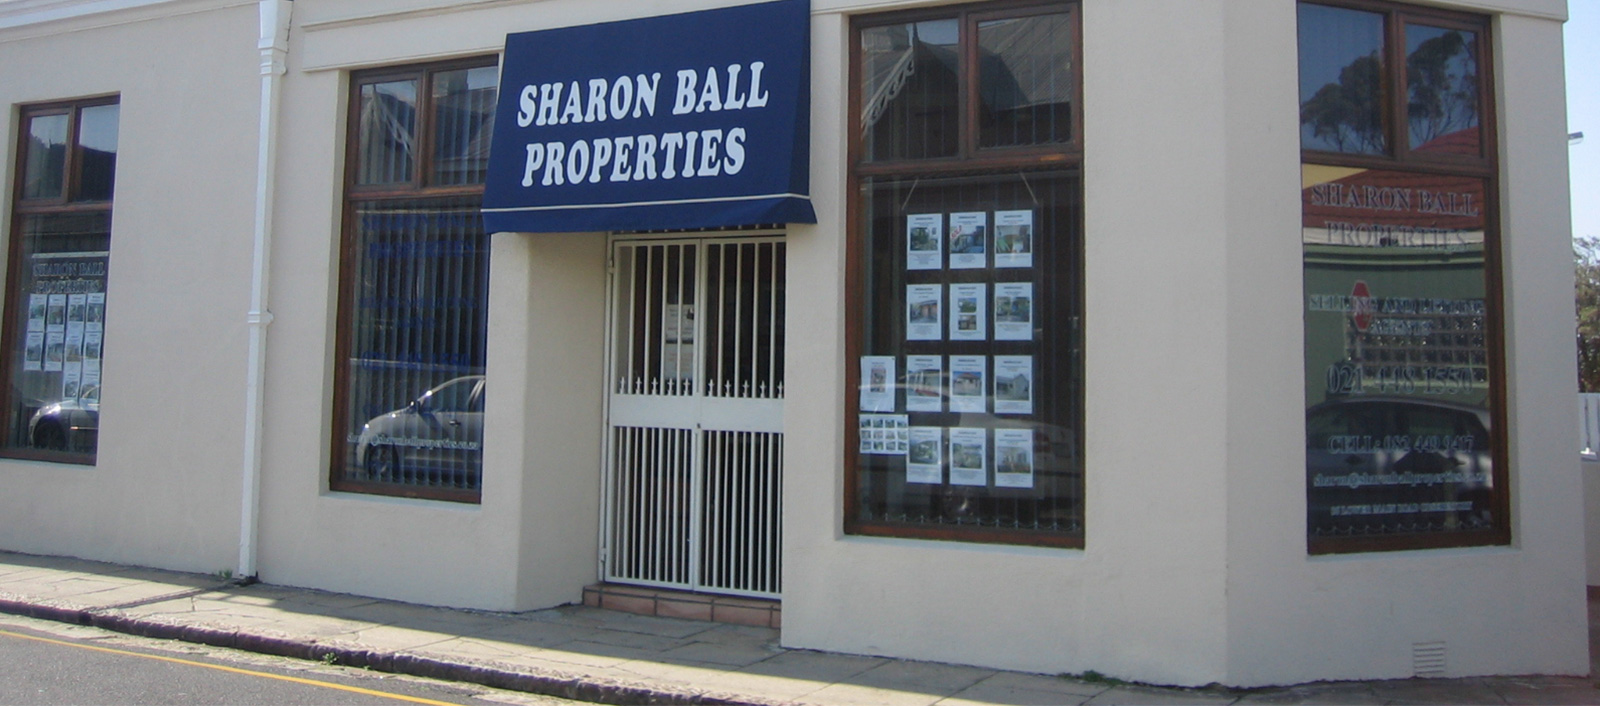 Sharon Ball Properties home image